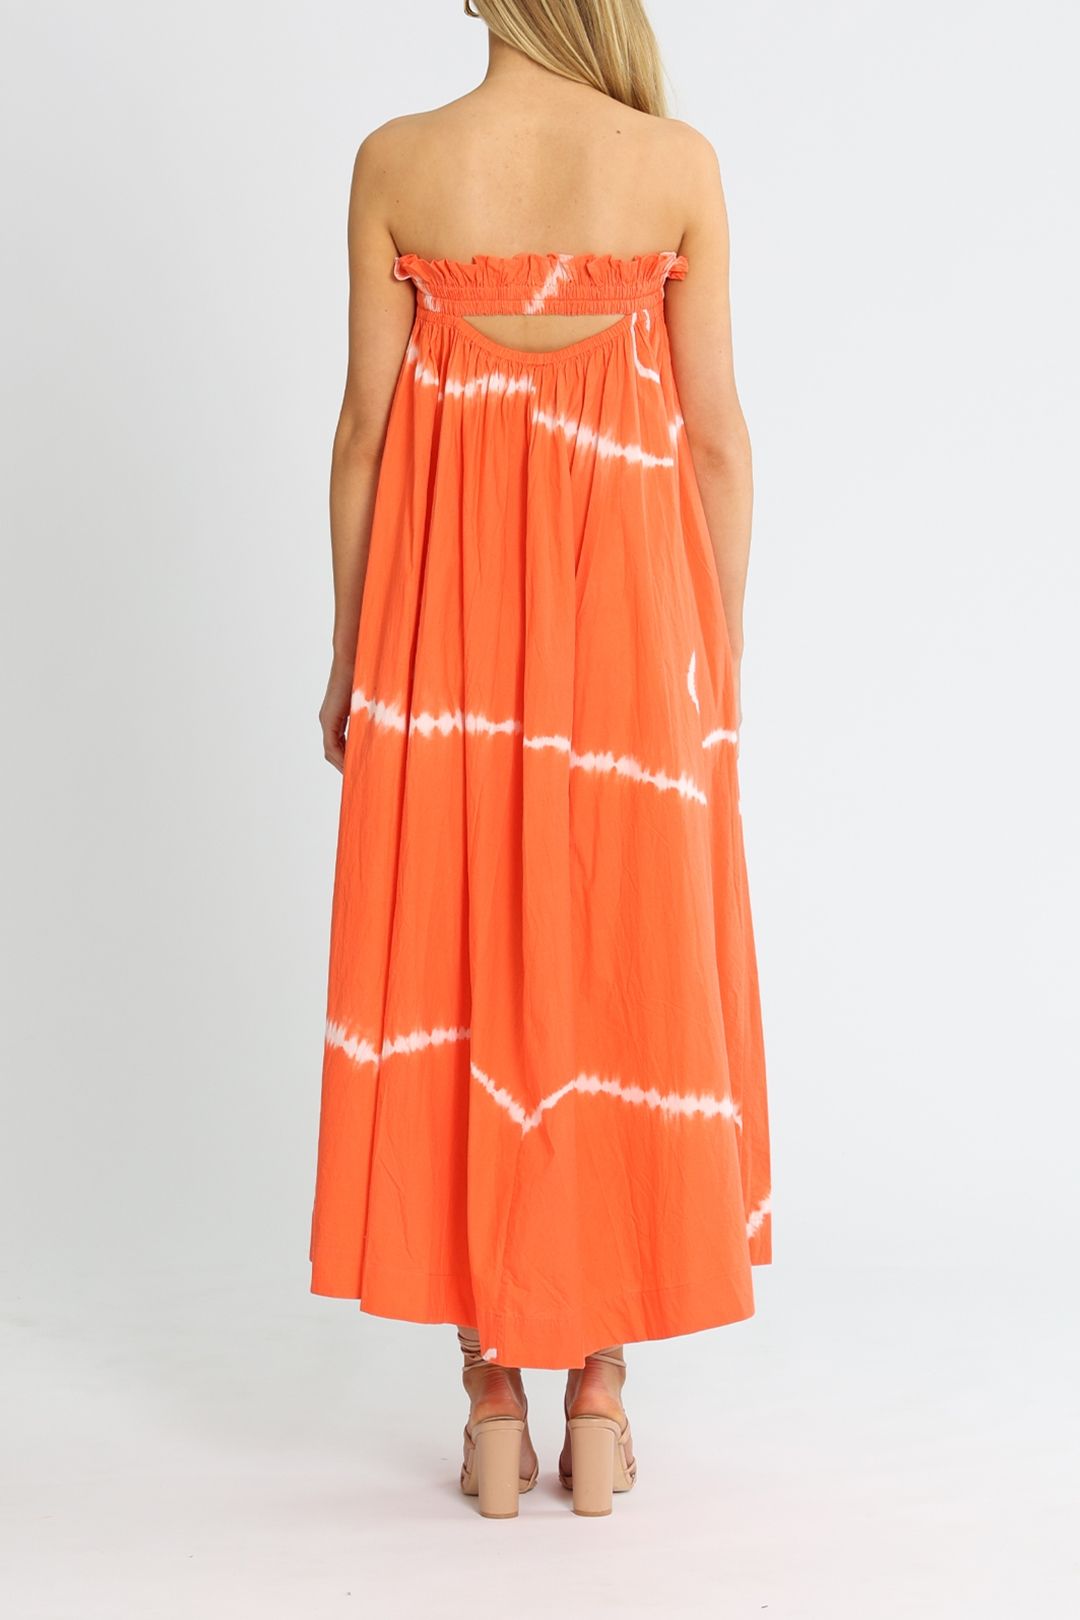 Steele Suria Dress orange